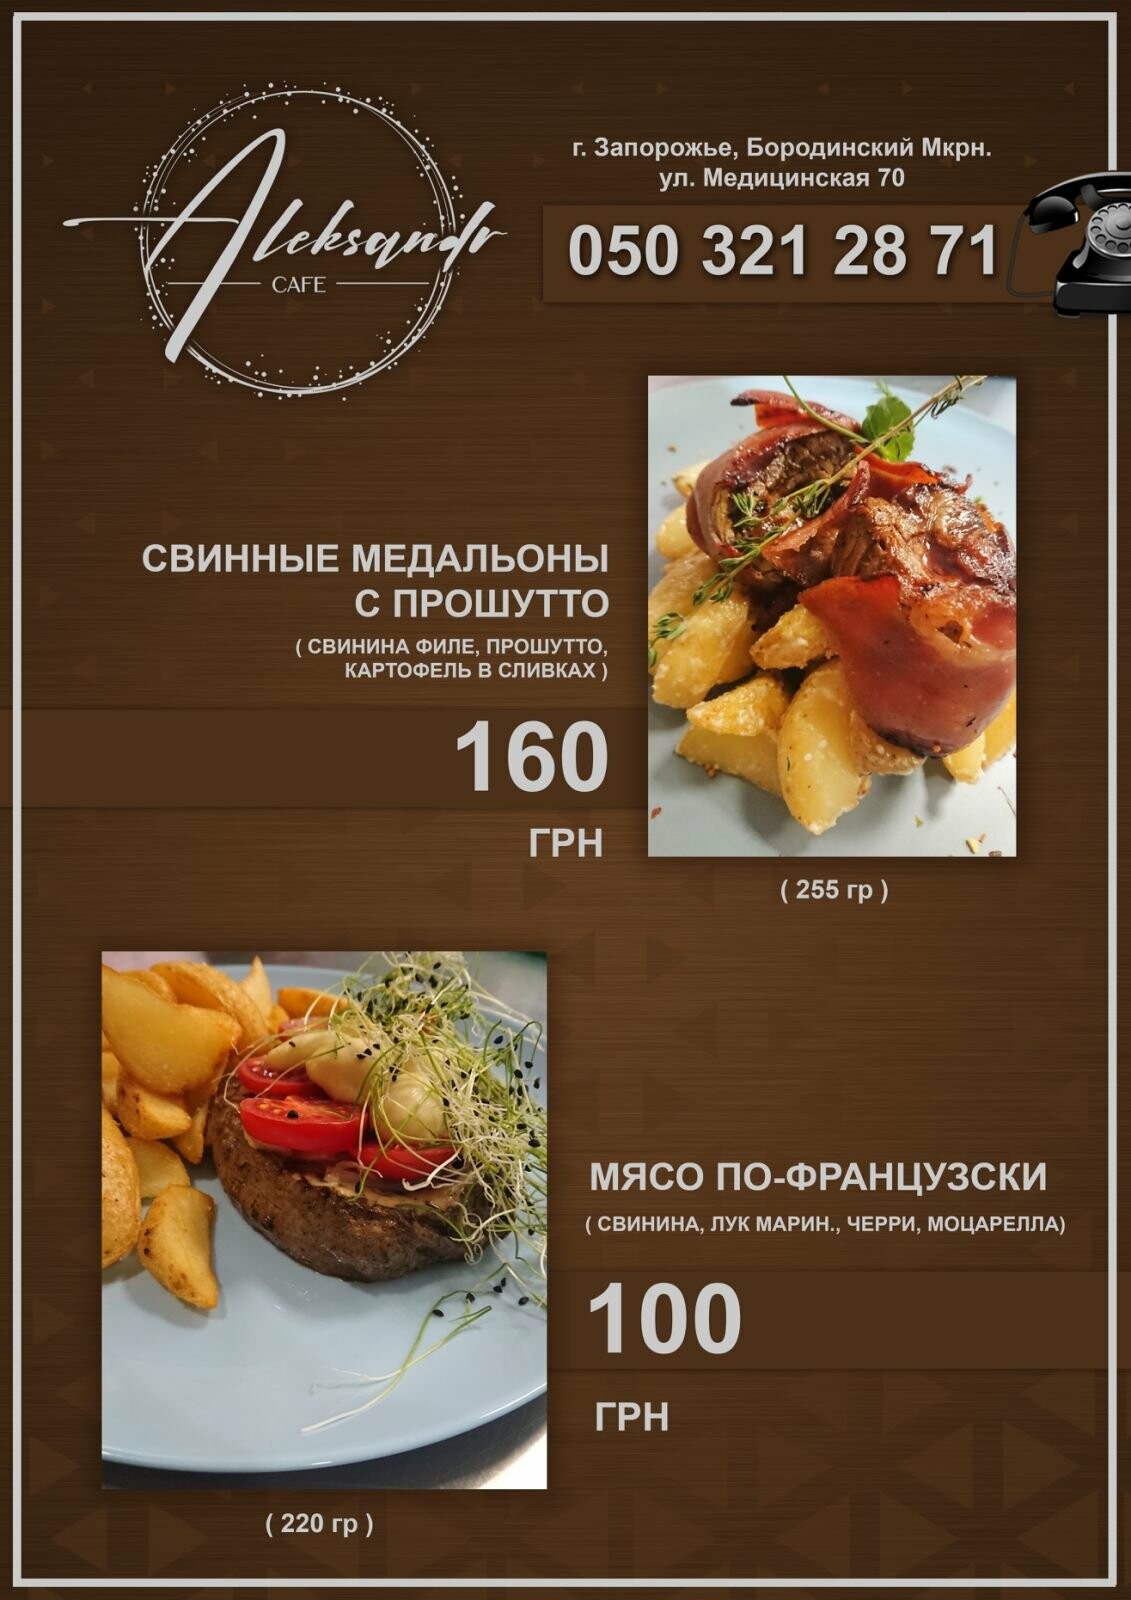 Доставка еды в Запорожье кафе Александр, фото-7